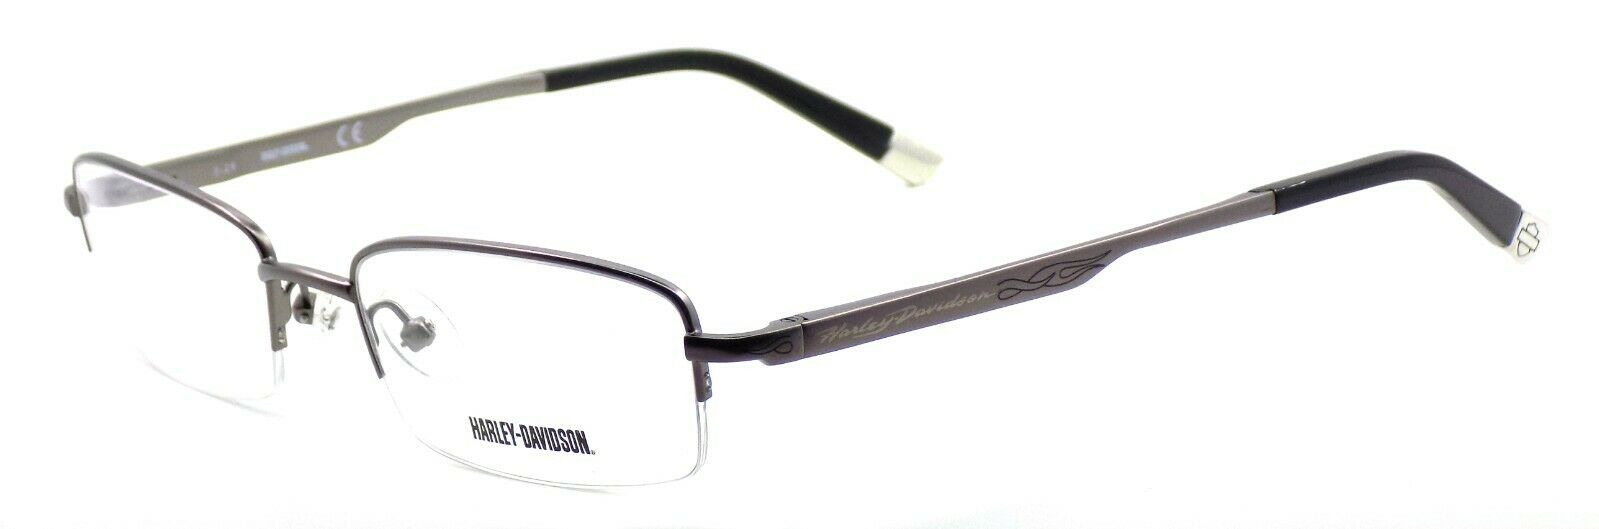 1-HD410 GUN Men's Half-rim Eyeglasses Frames 52-19-145 Gunmetal + CASE-715583433212-IKSpecs